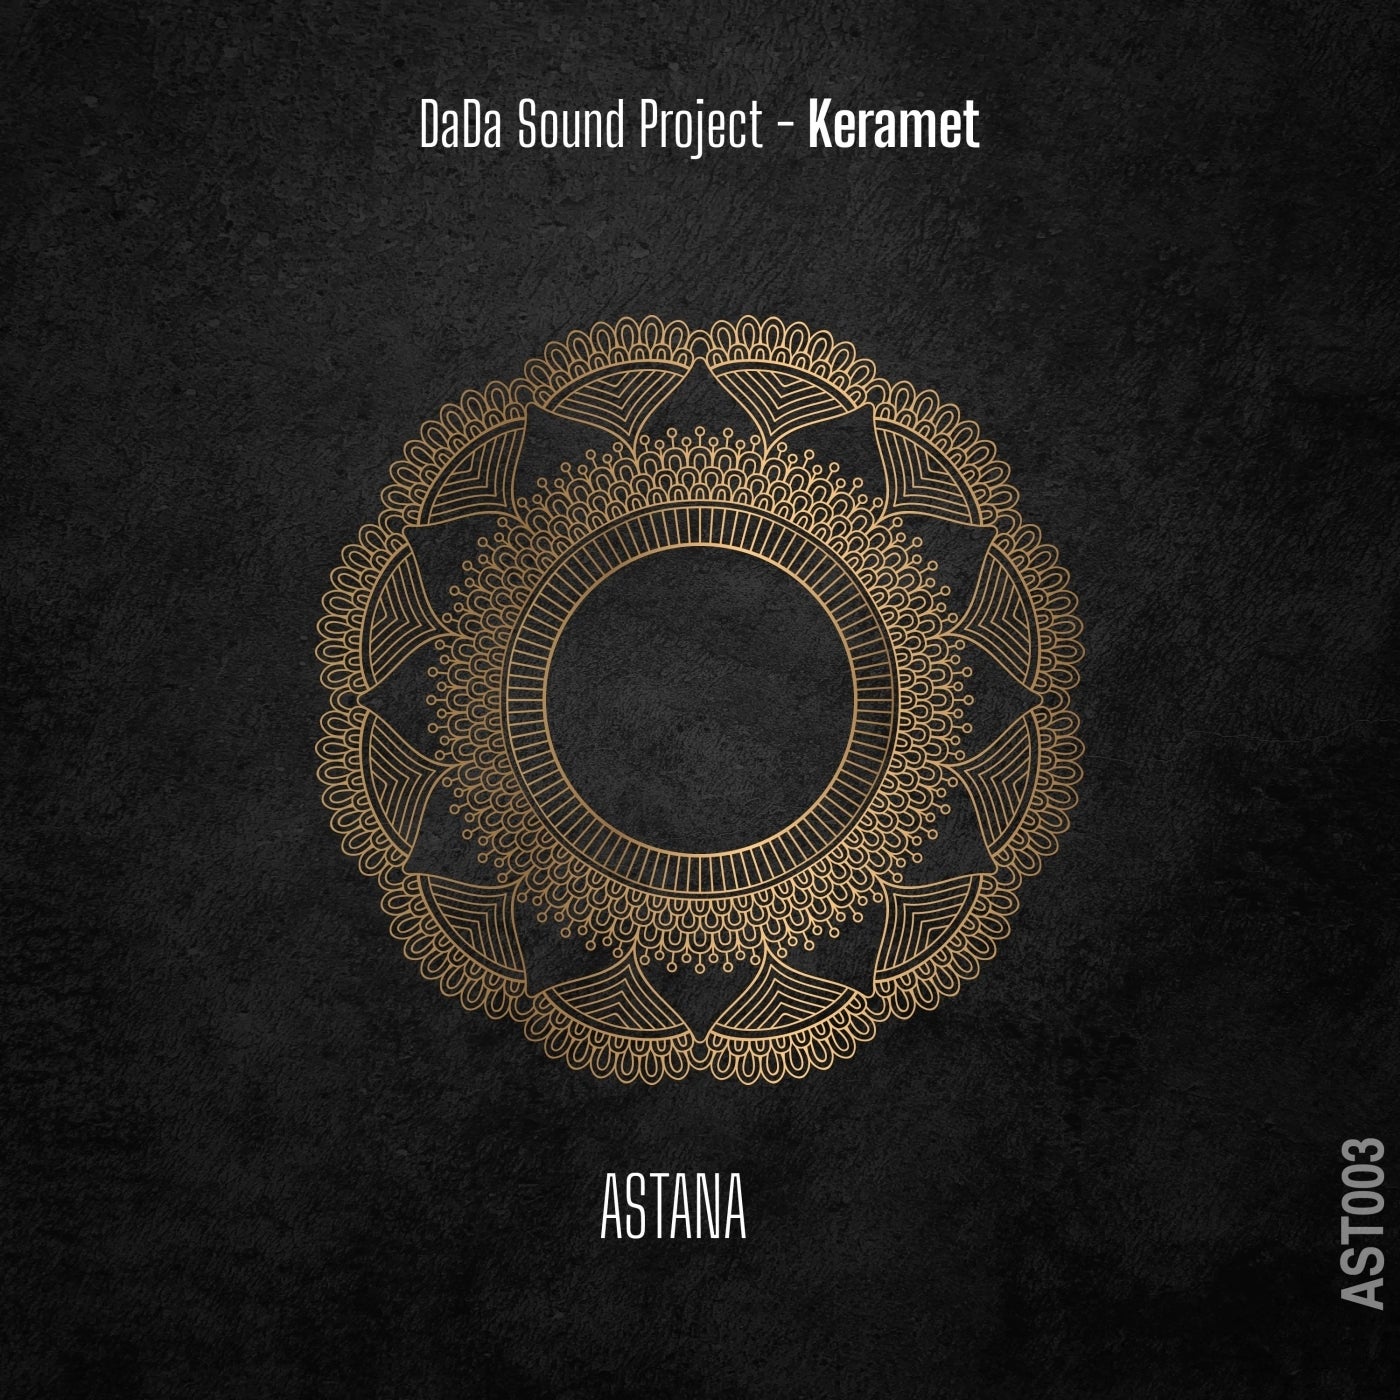 DaDa Sound Project - Keramet [AST003]